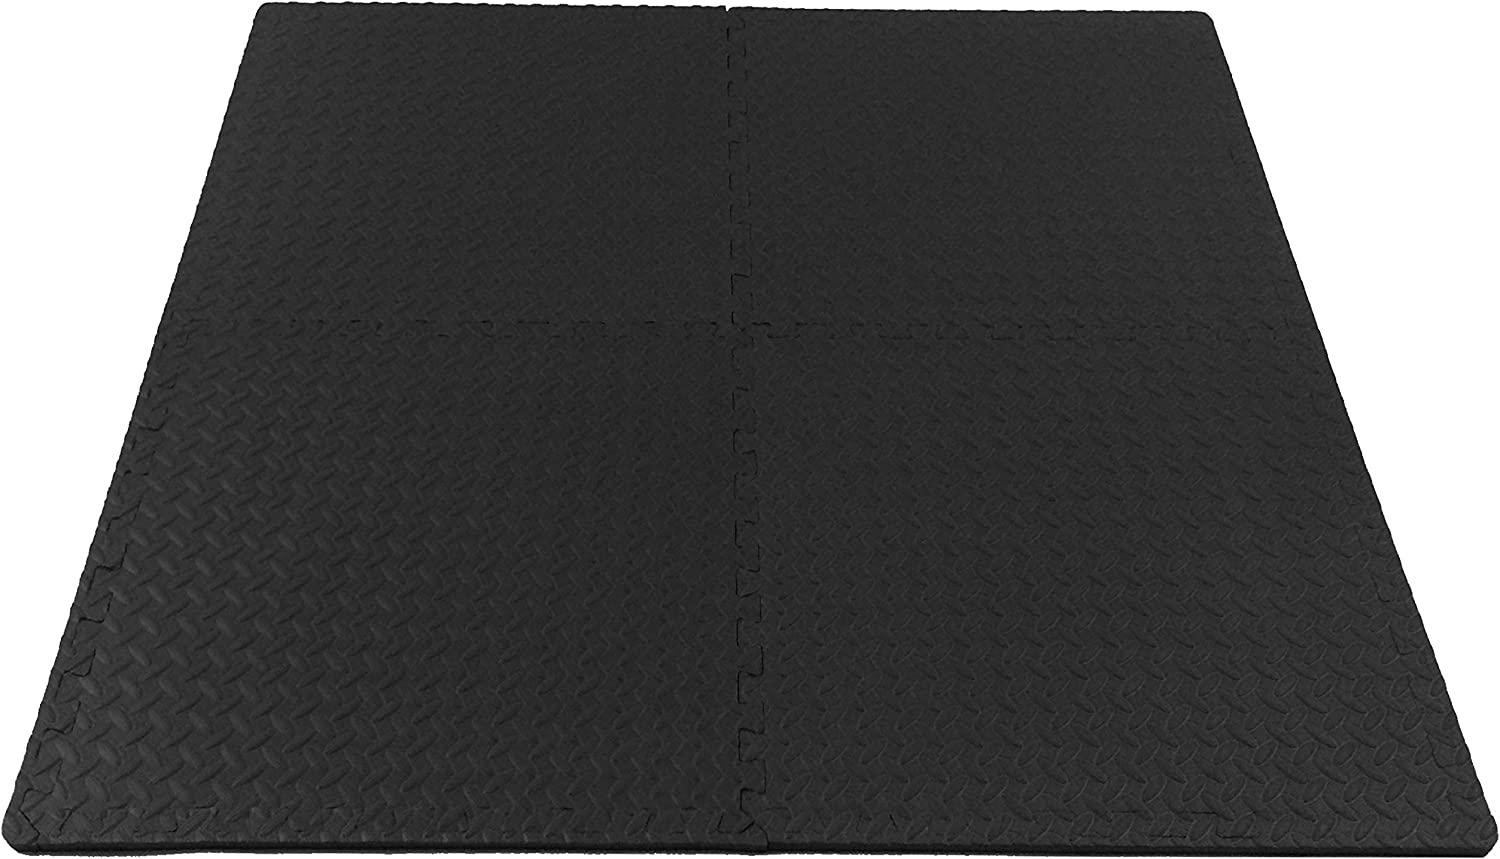 ProSource Extra Thick Puzzle Exercise Mat, 1, Eva Foam Interlocking tiles, Black